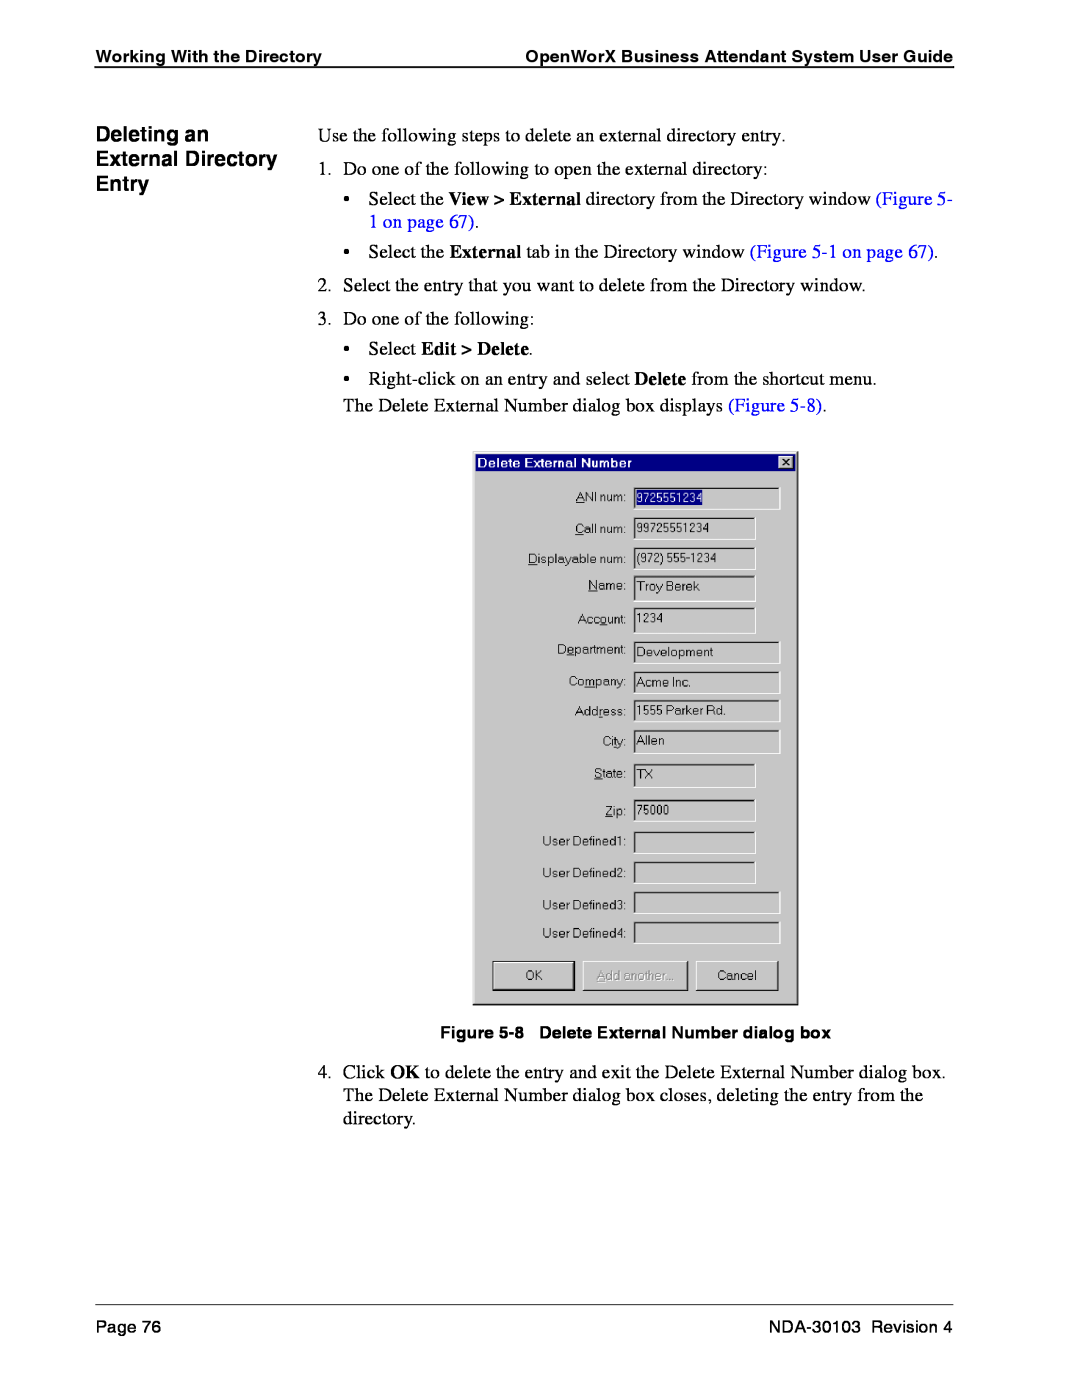 NEC NDA-30103-004 manual Deleting an External Directory Entry 